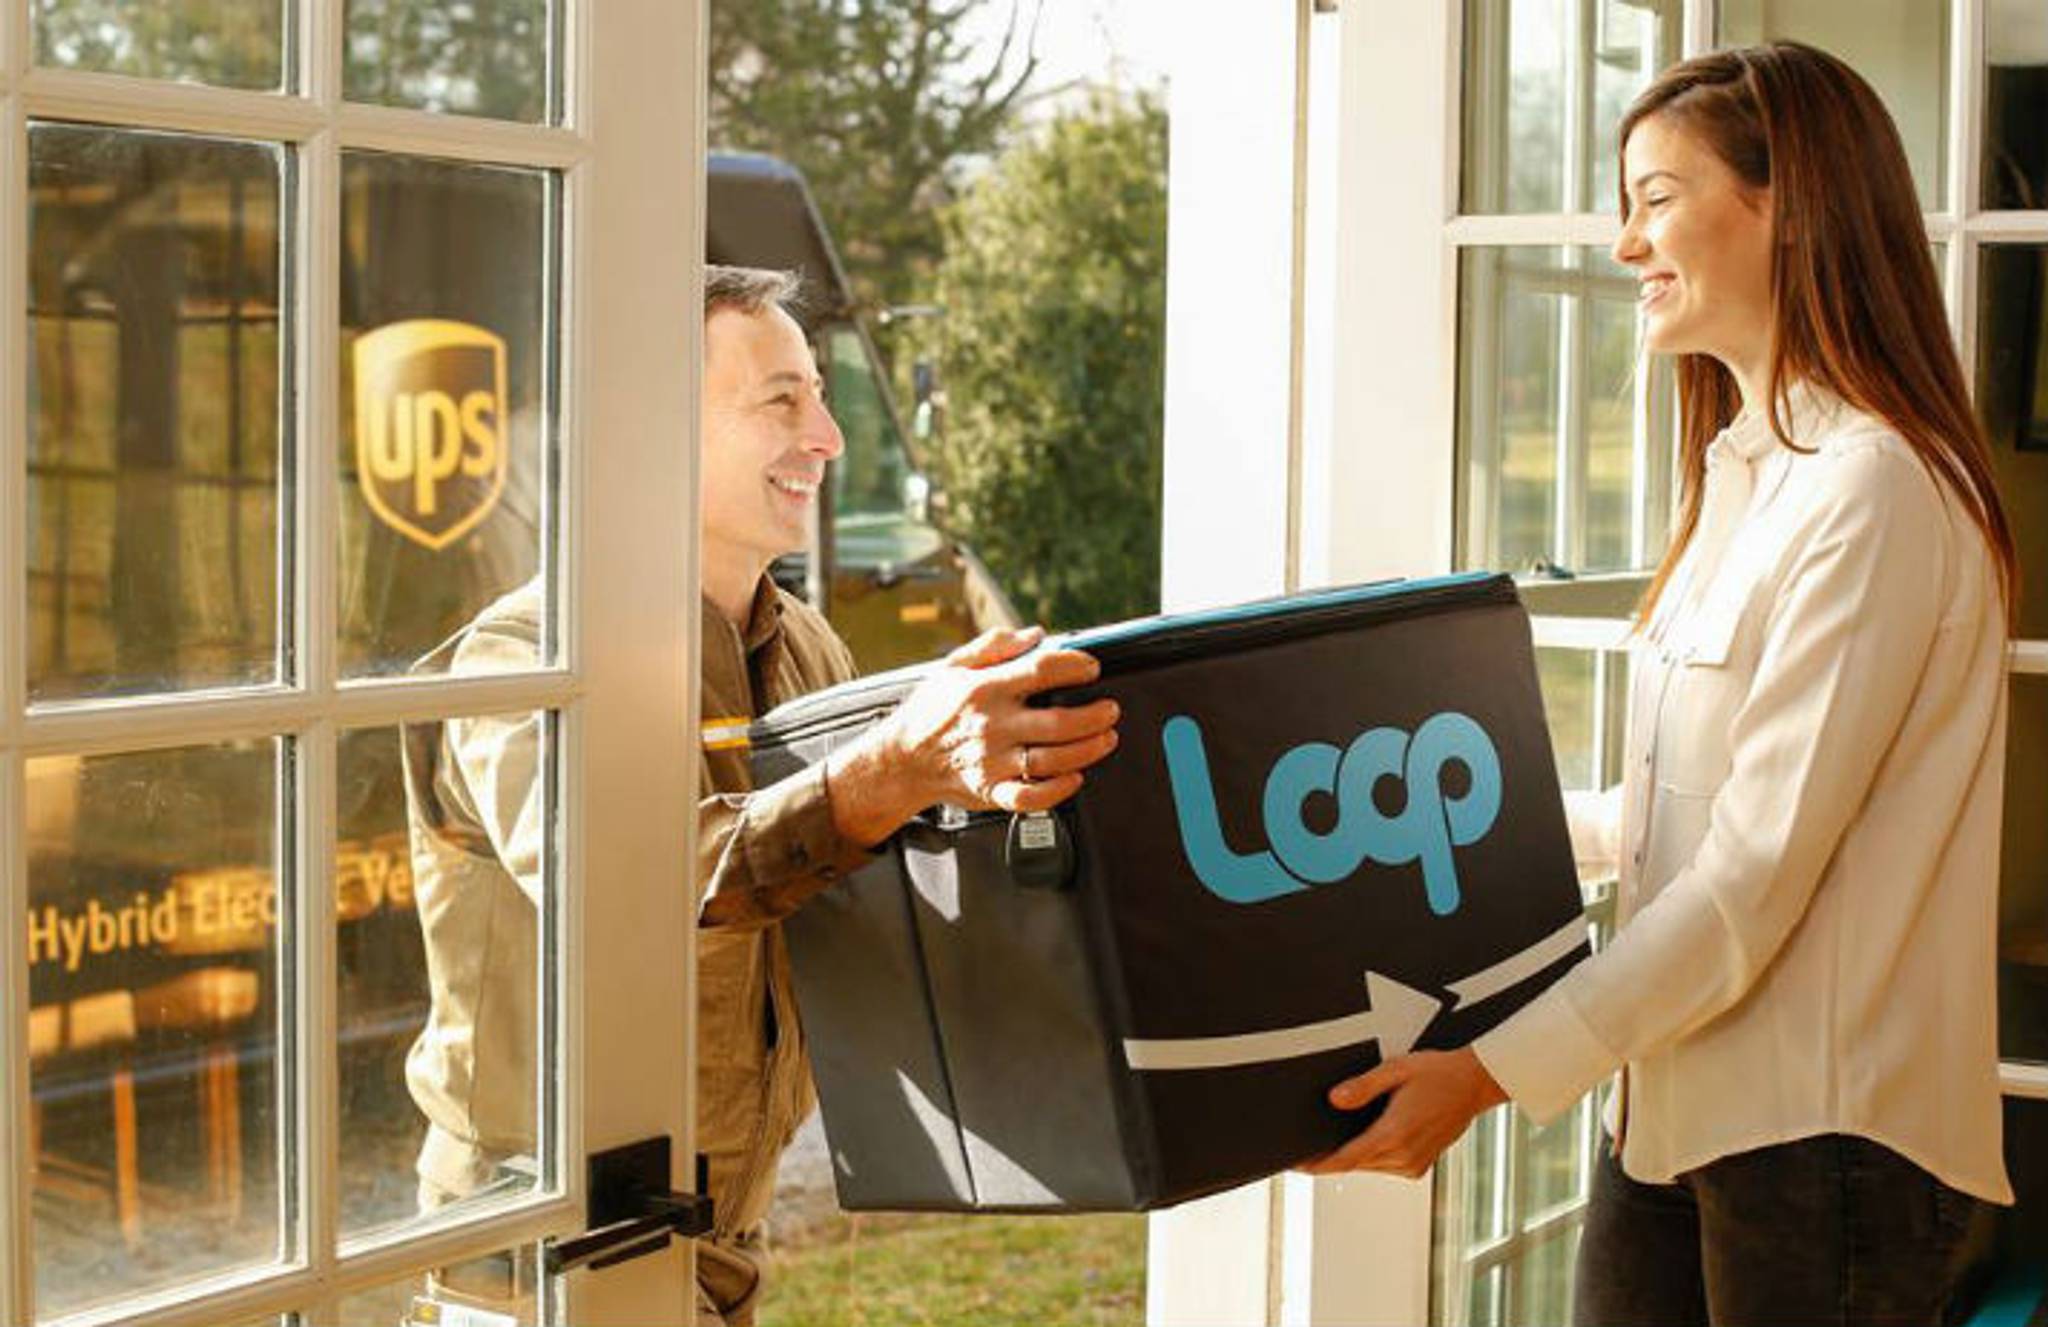 Loop delivers top US brands in reusable packaging